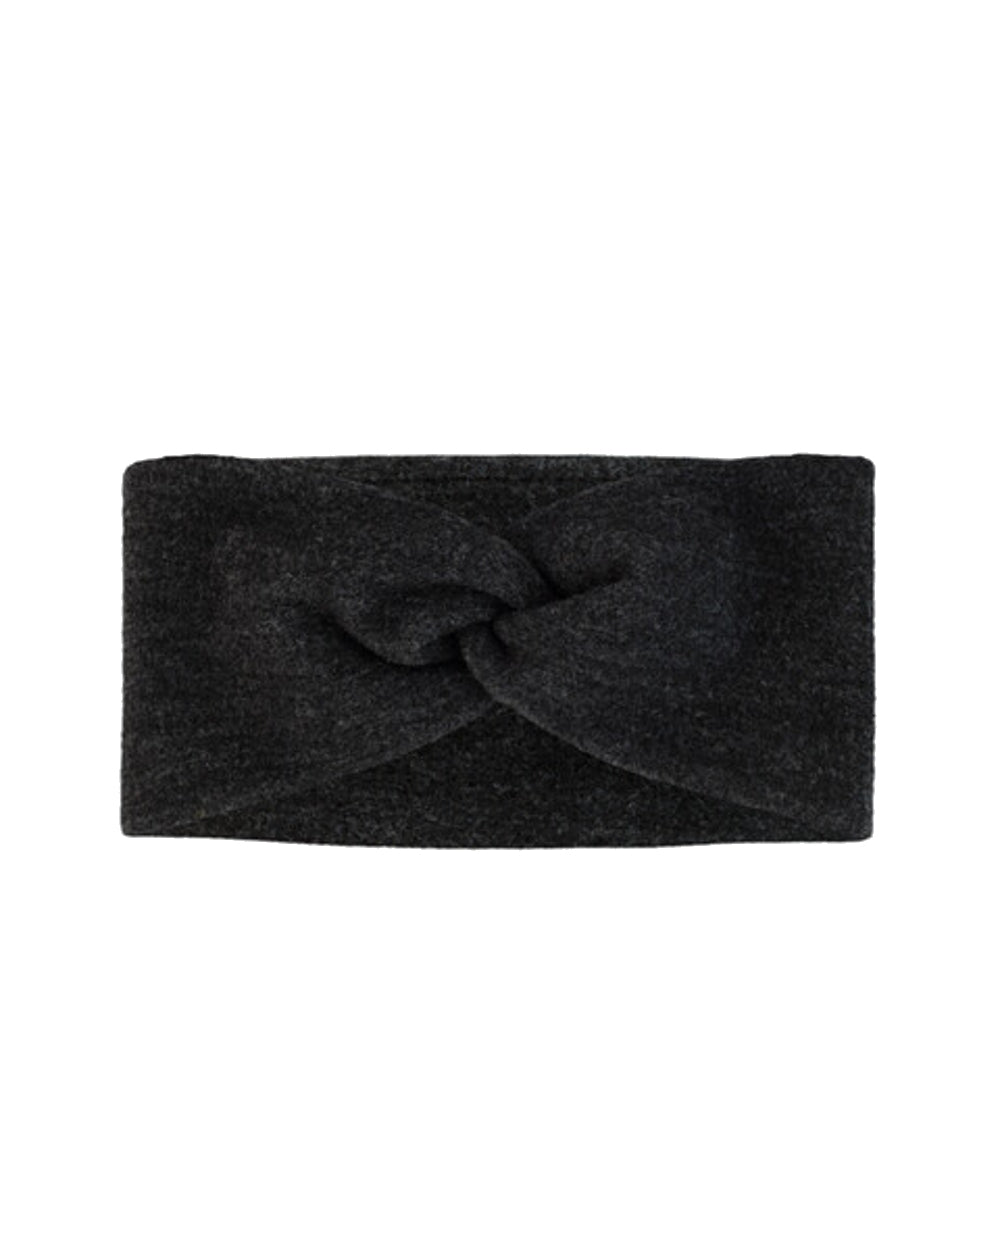 Buff Merino Fleece Headband in Black 